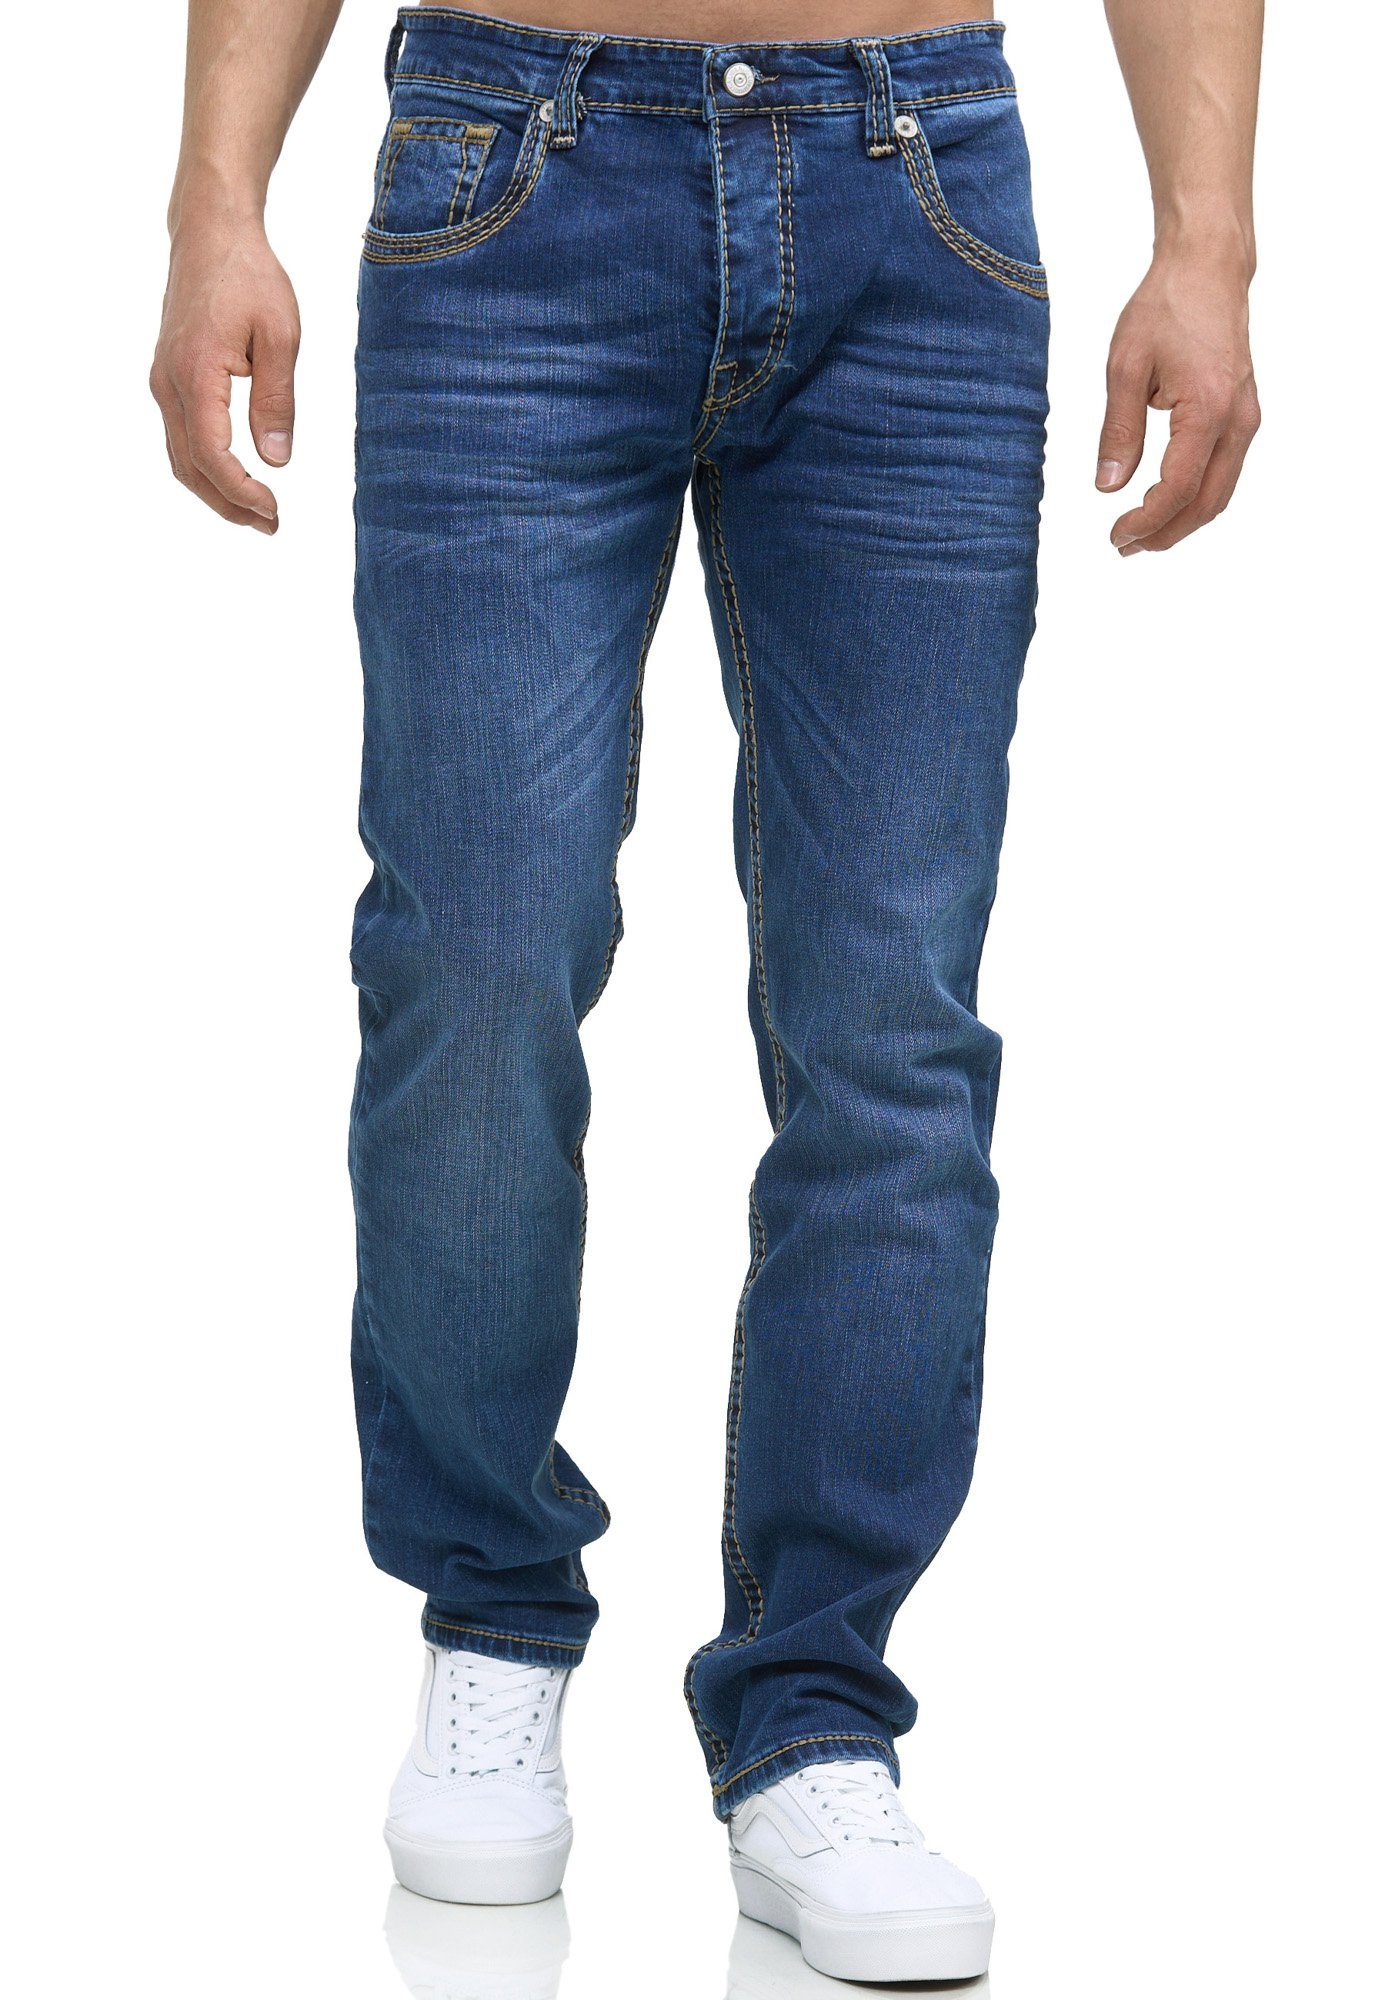 Code47 Five Code47 Hose blue Männer Bootcut Herren 905 Pocket Denim Regular-fit-Jeans Fit Jeans medium Regular